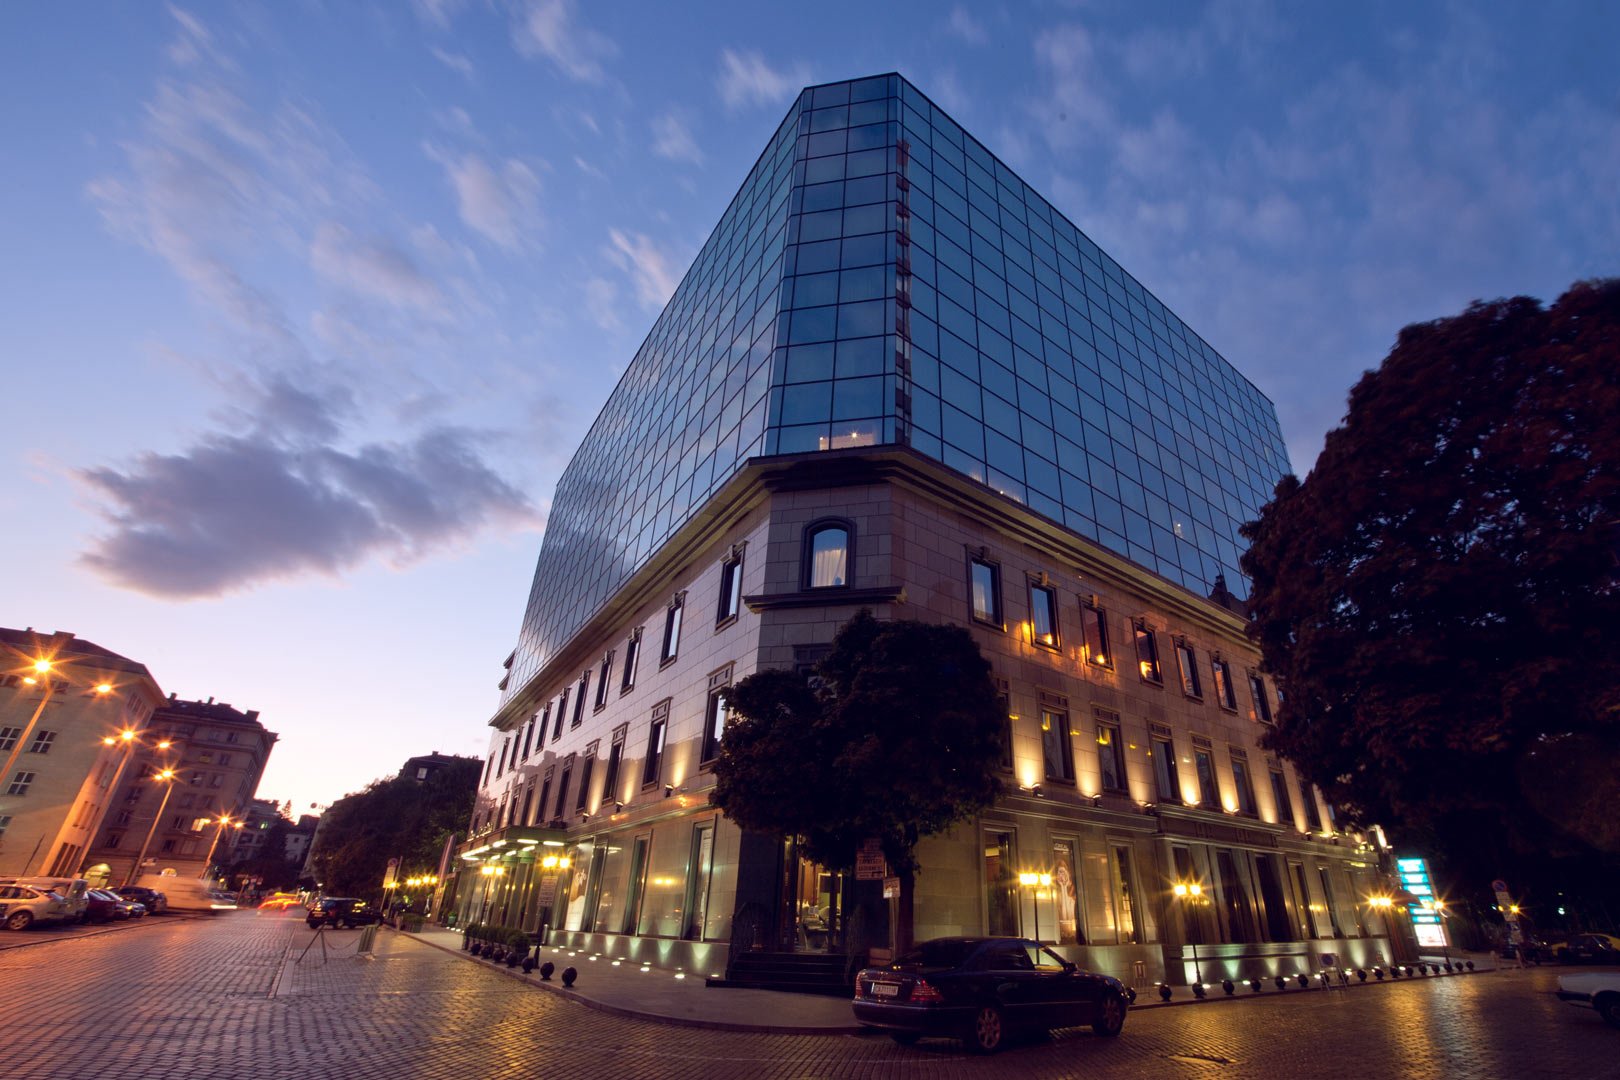 Sofia Hotels Management implements Cendyns eInsight CRM